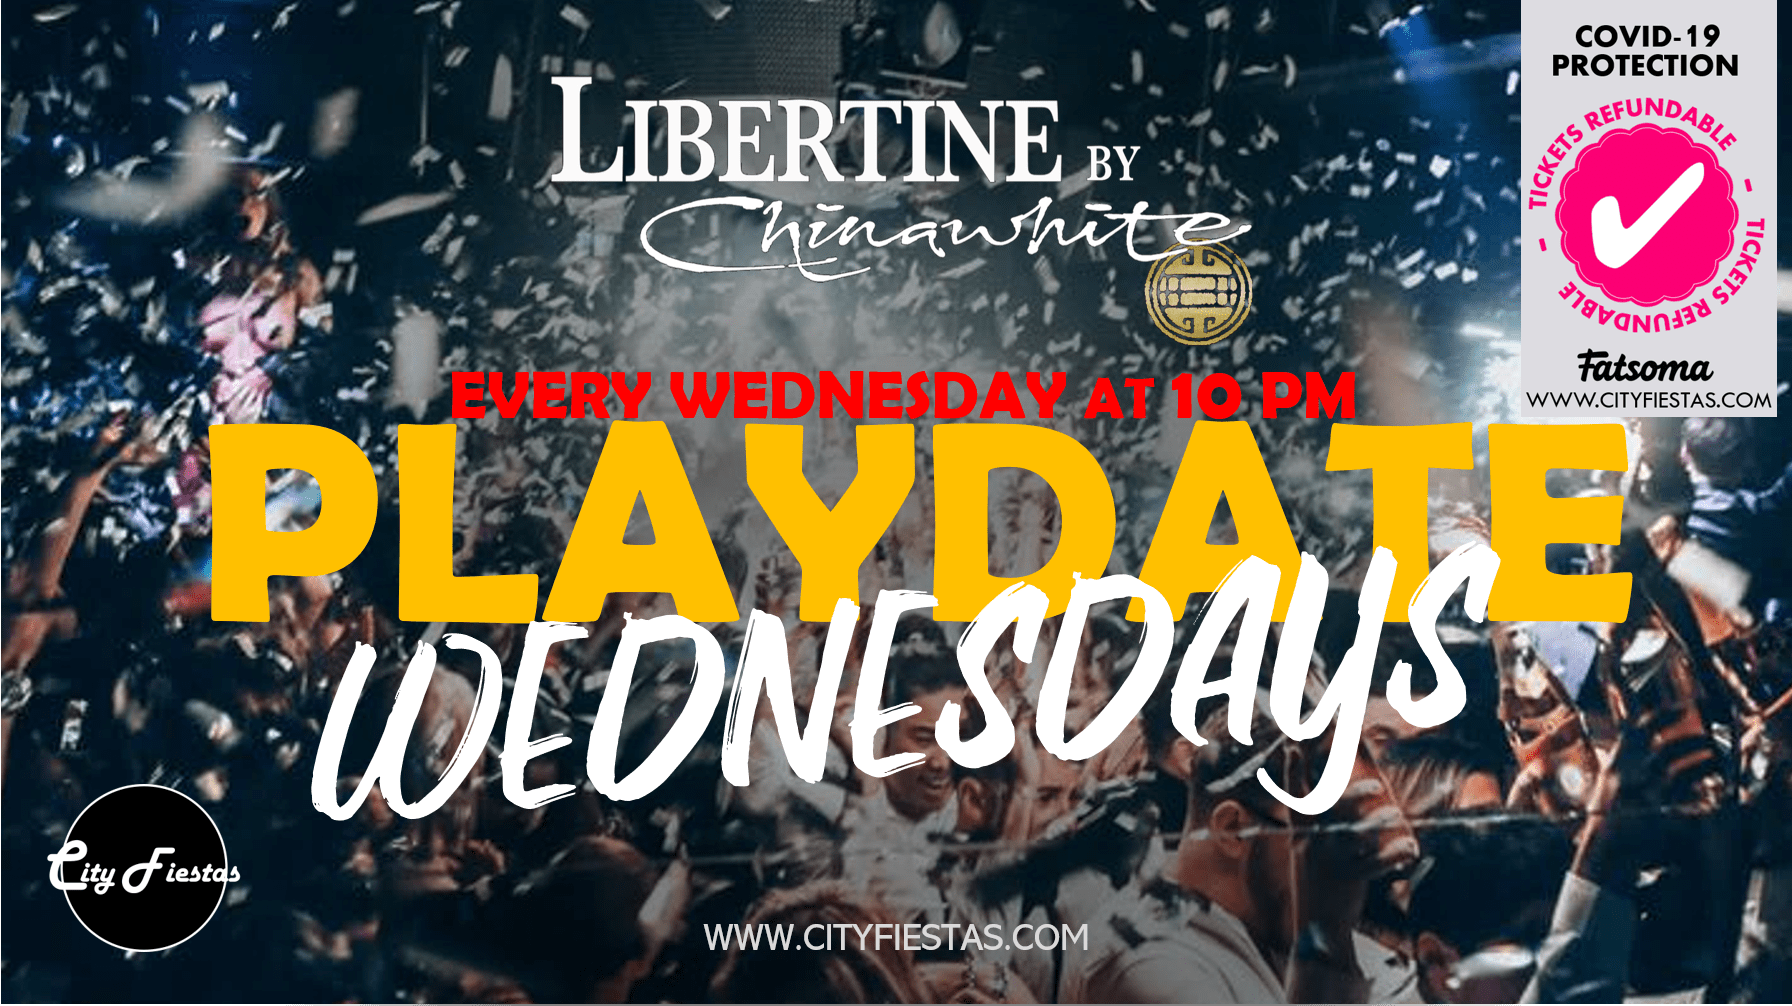 Playdate Wednesdays at Libertine Nightclub + 1 FREE DRINK 🍸